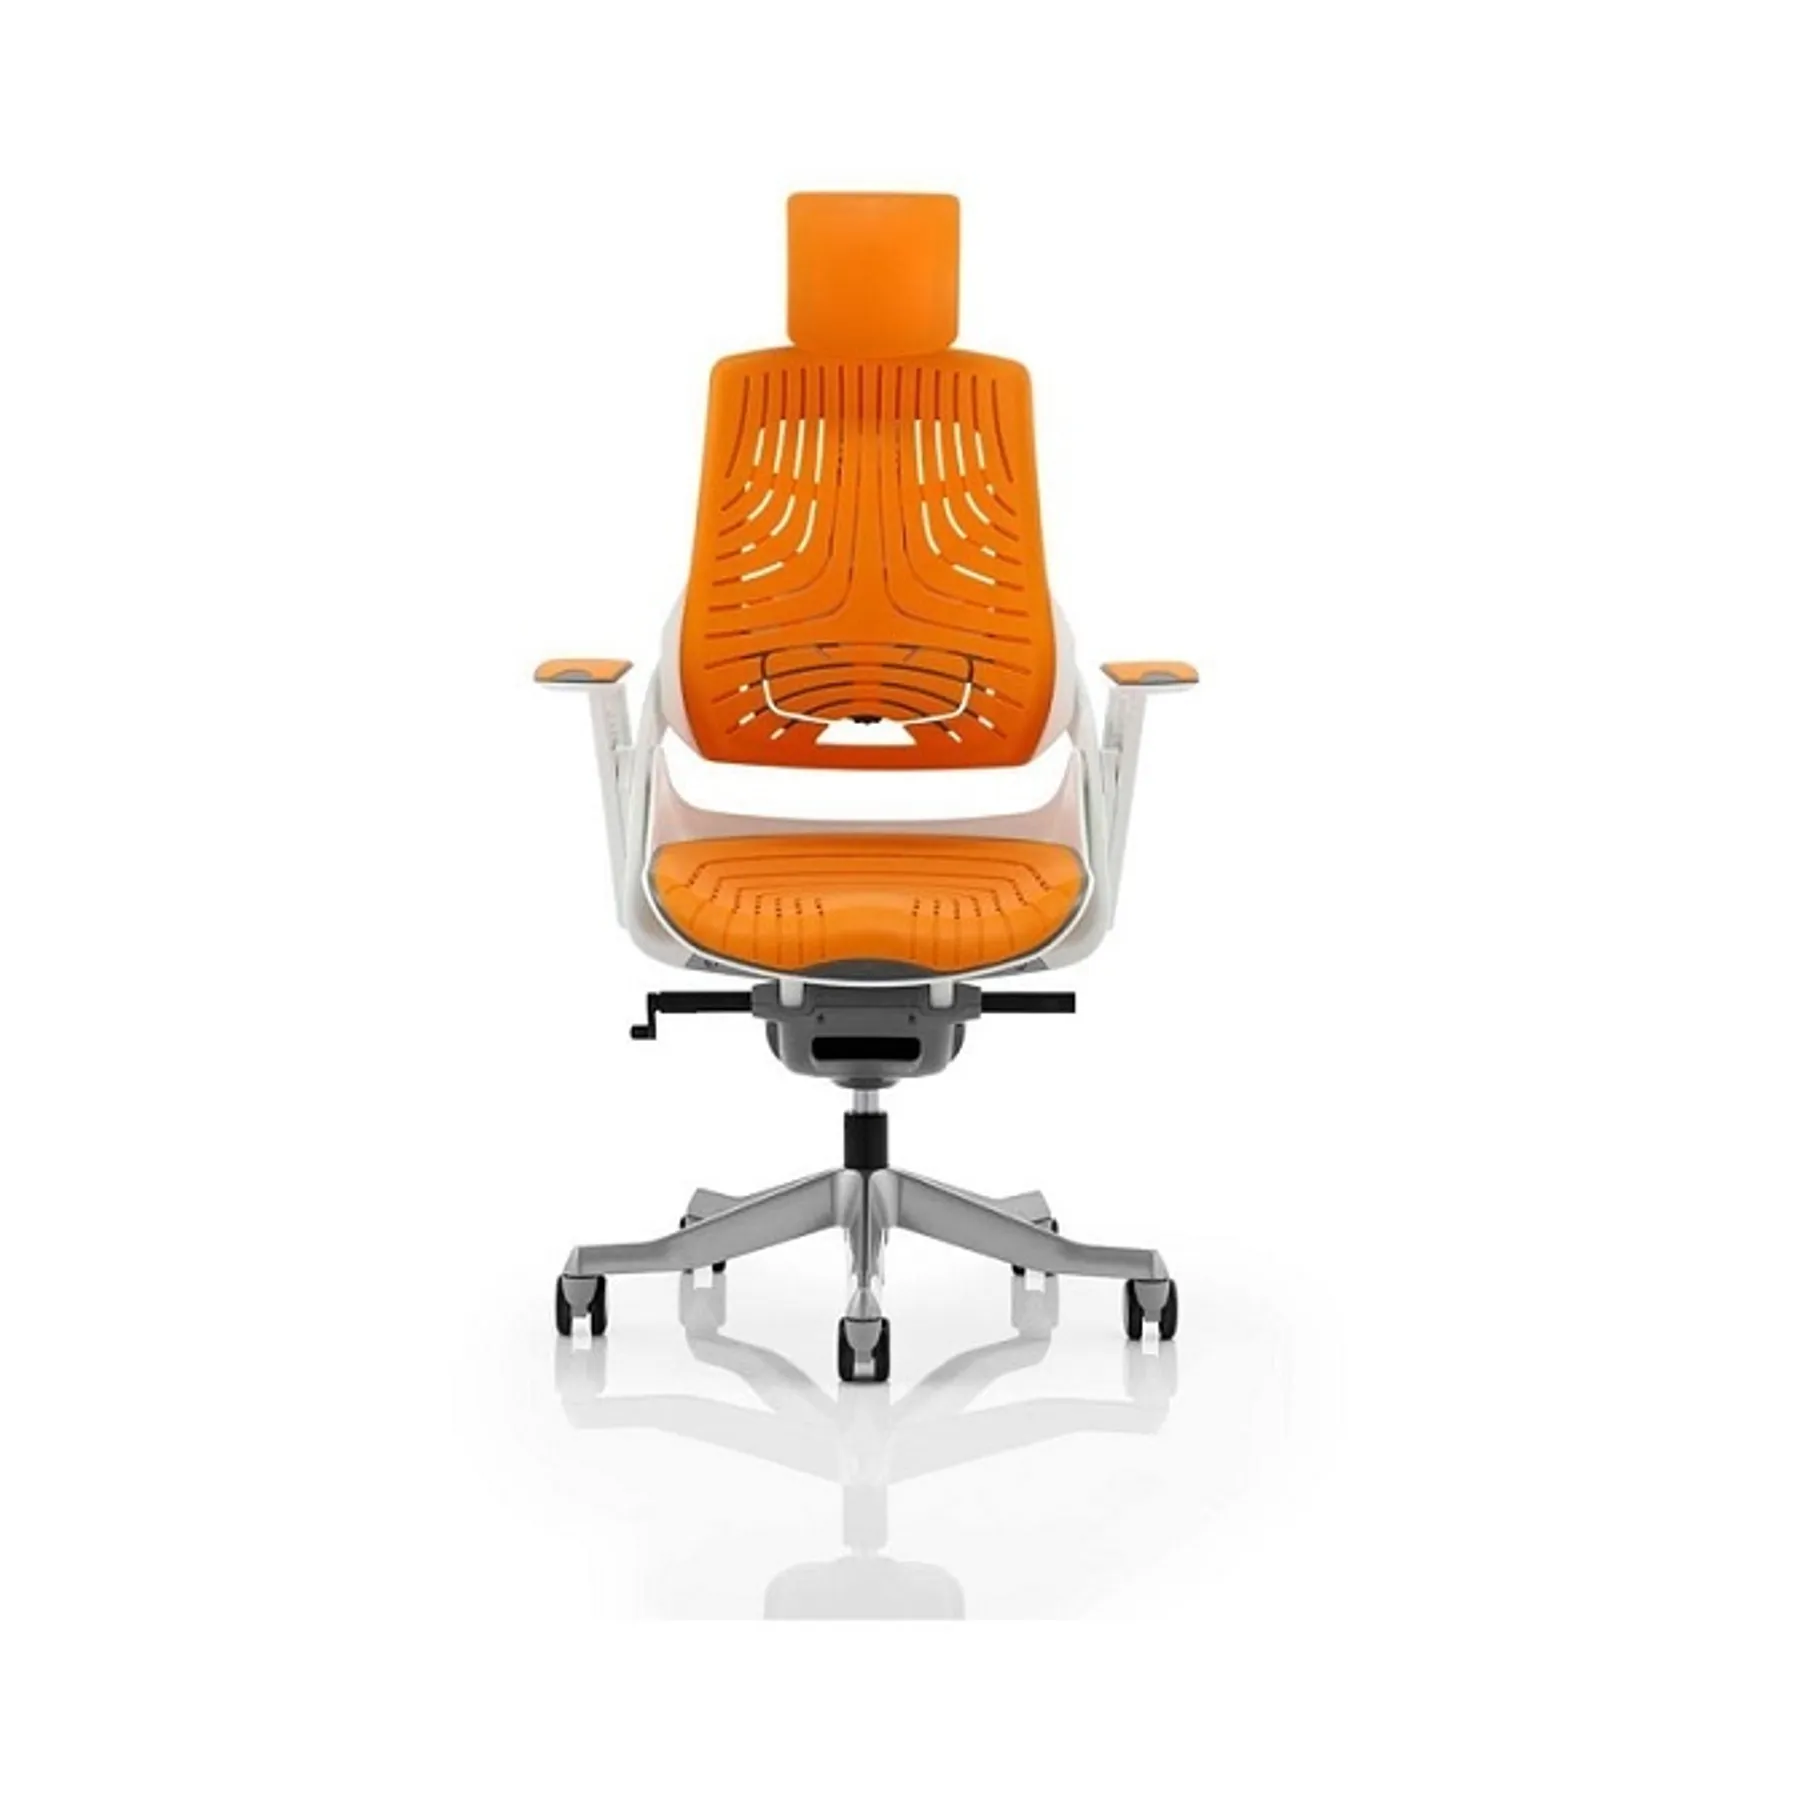 Lof Direct Dynamic zure orange elastomer executive chair KC0165 front